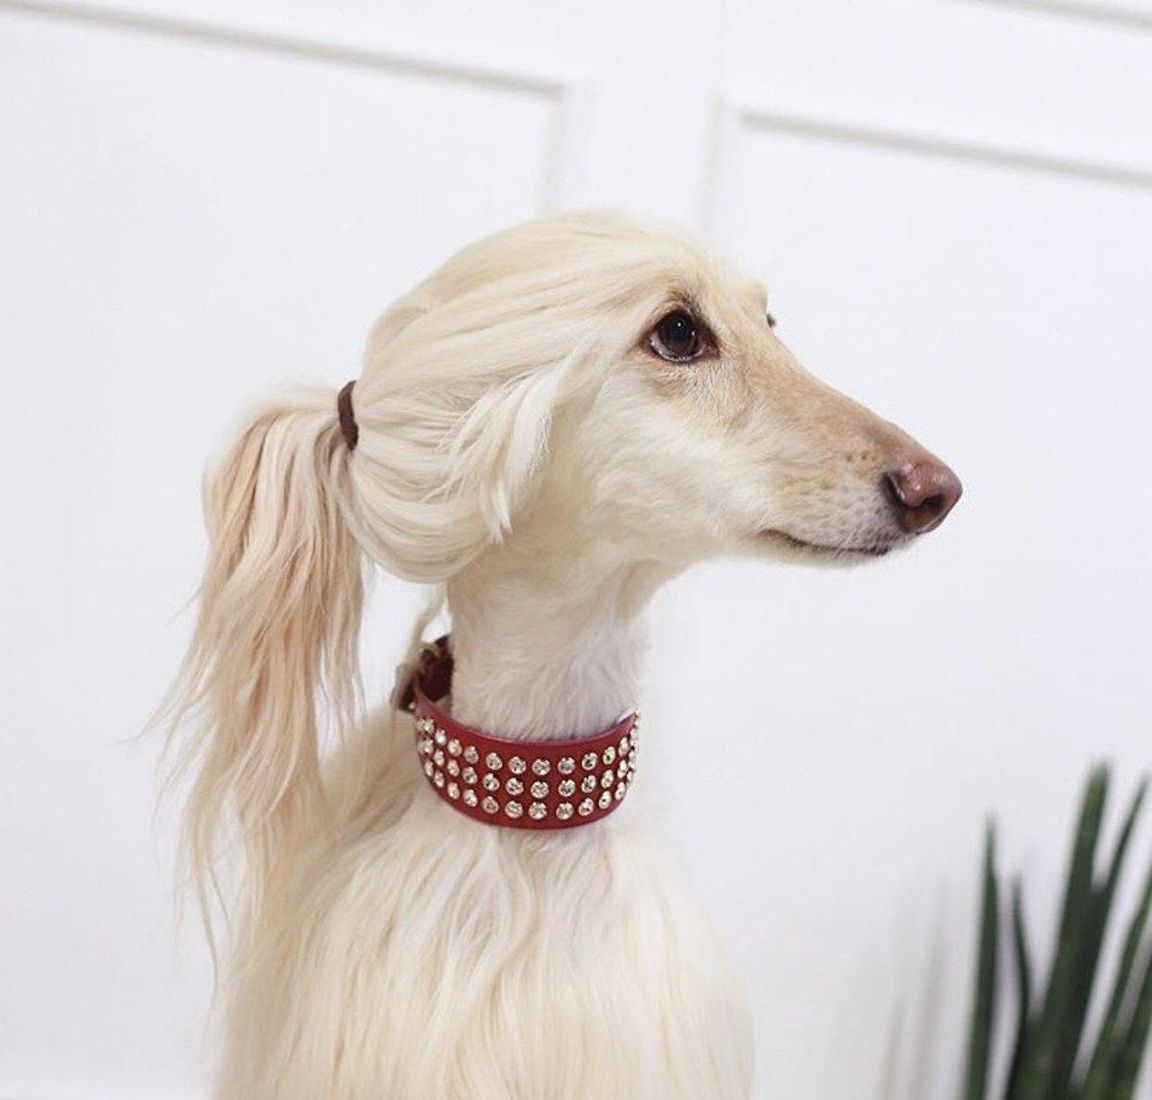 Собака с длинными волосами на ушах (71 фото) - картинки sobakovod.club